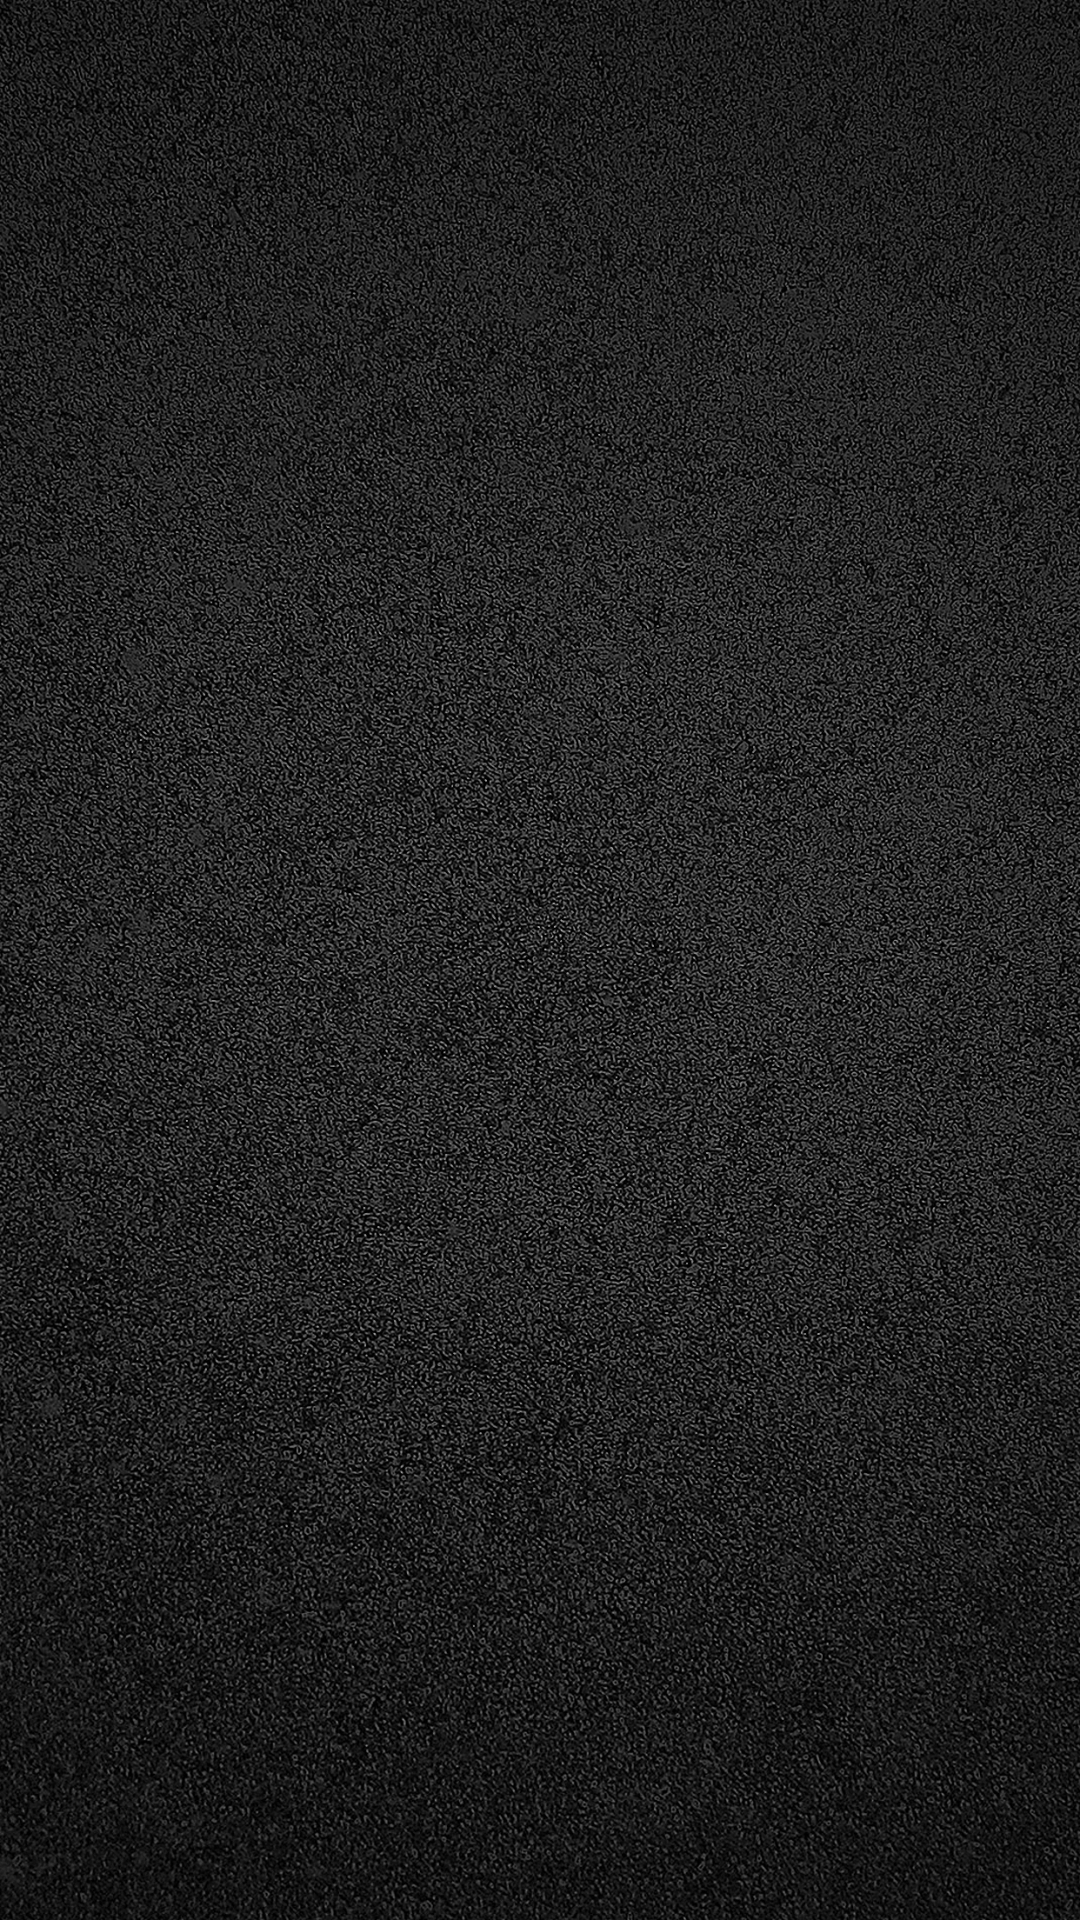 Simple Dark Wallpaper For iPhone 6s Plus